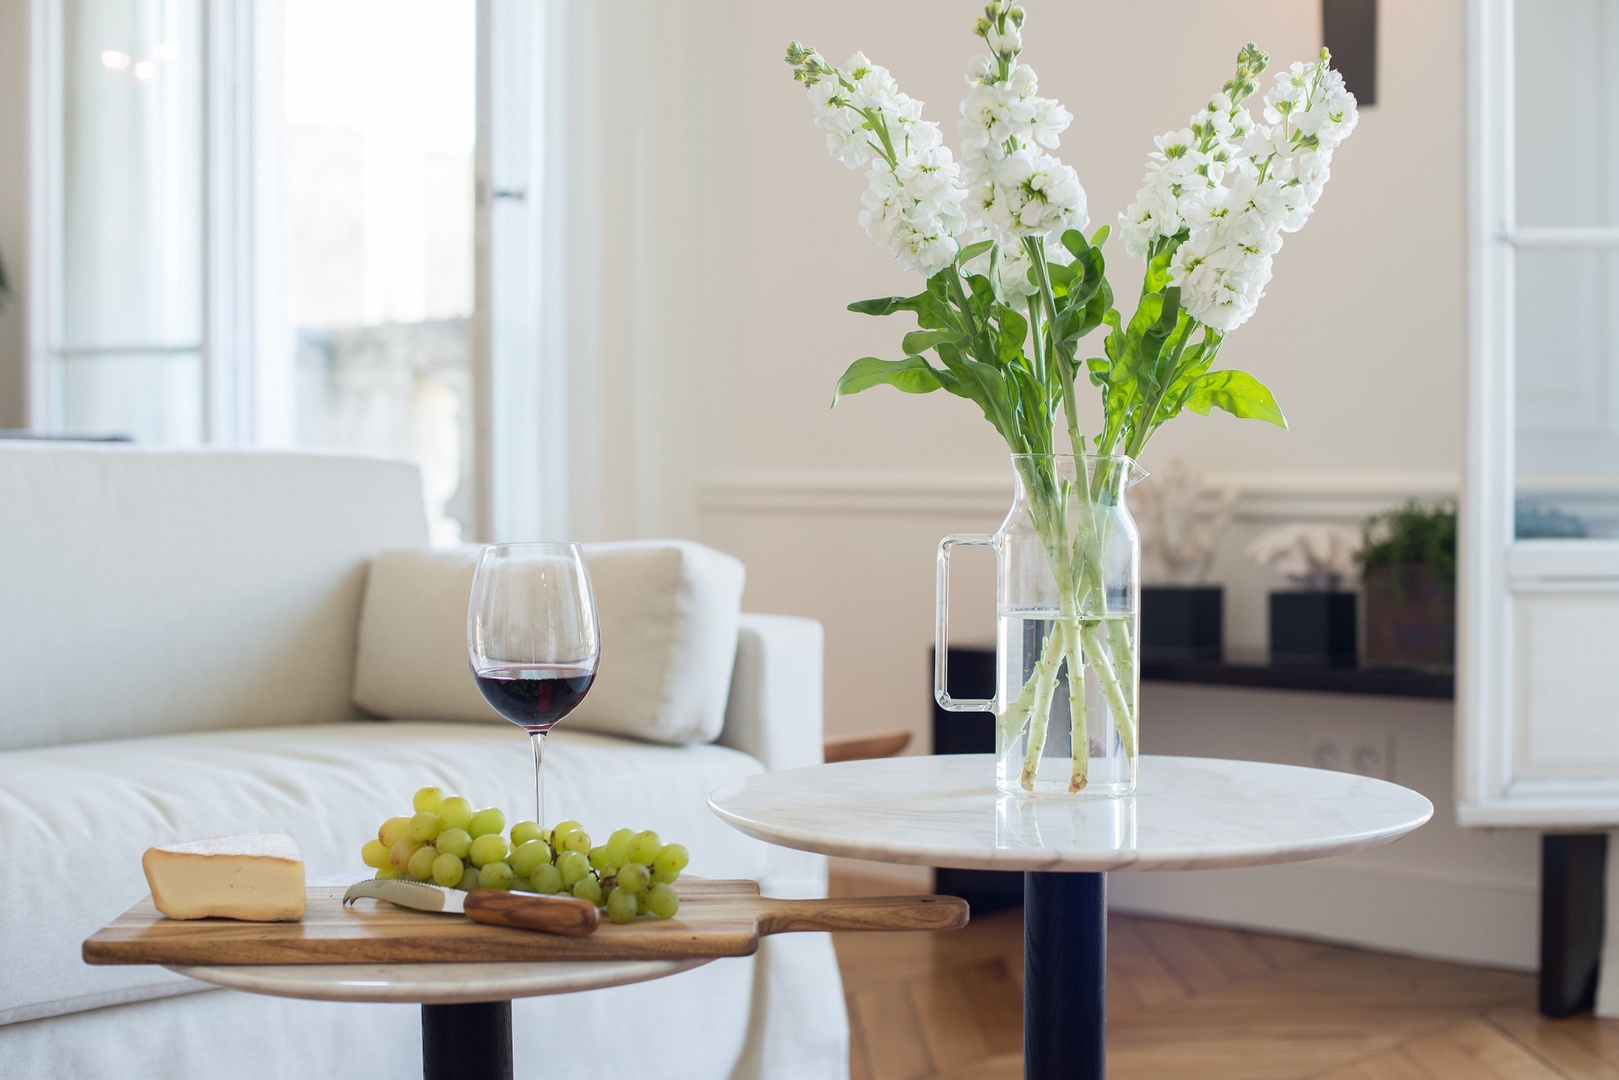 The apartment exudes Parisian elegance and charm.